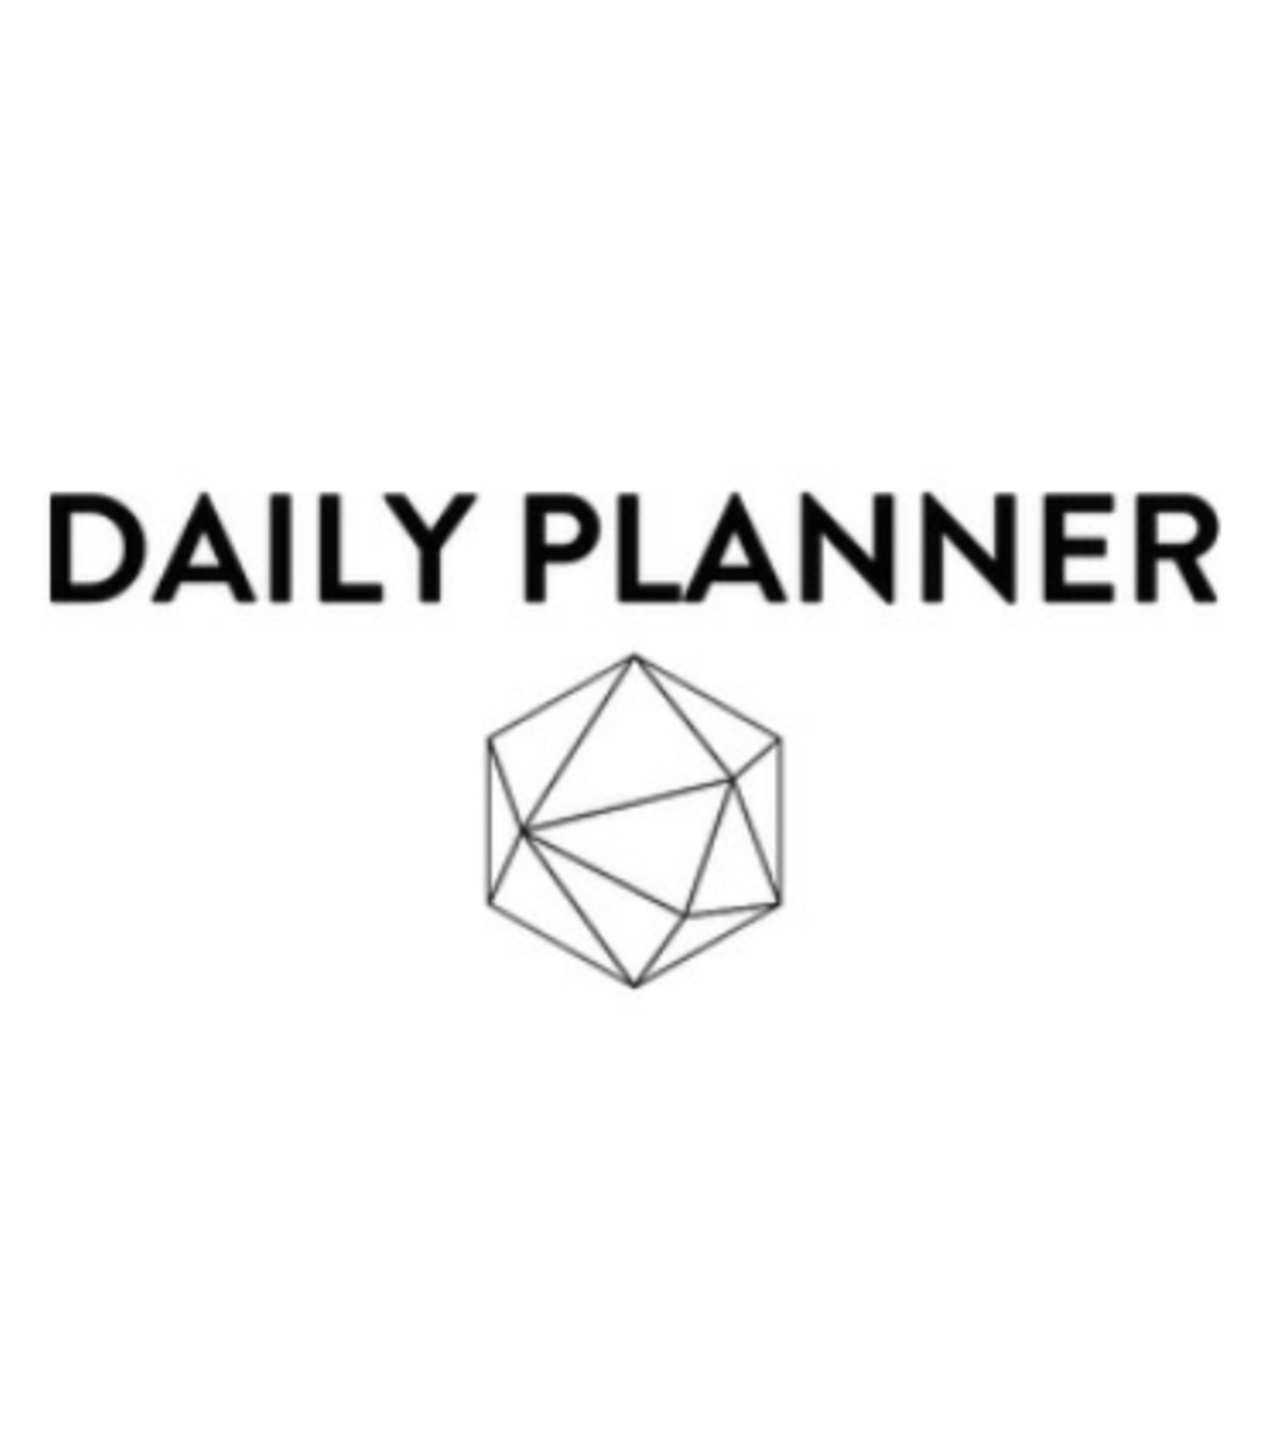 Daily Planner logo